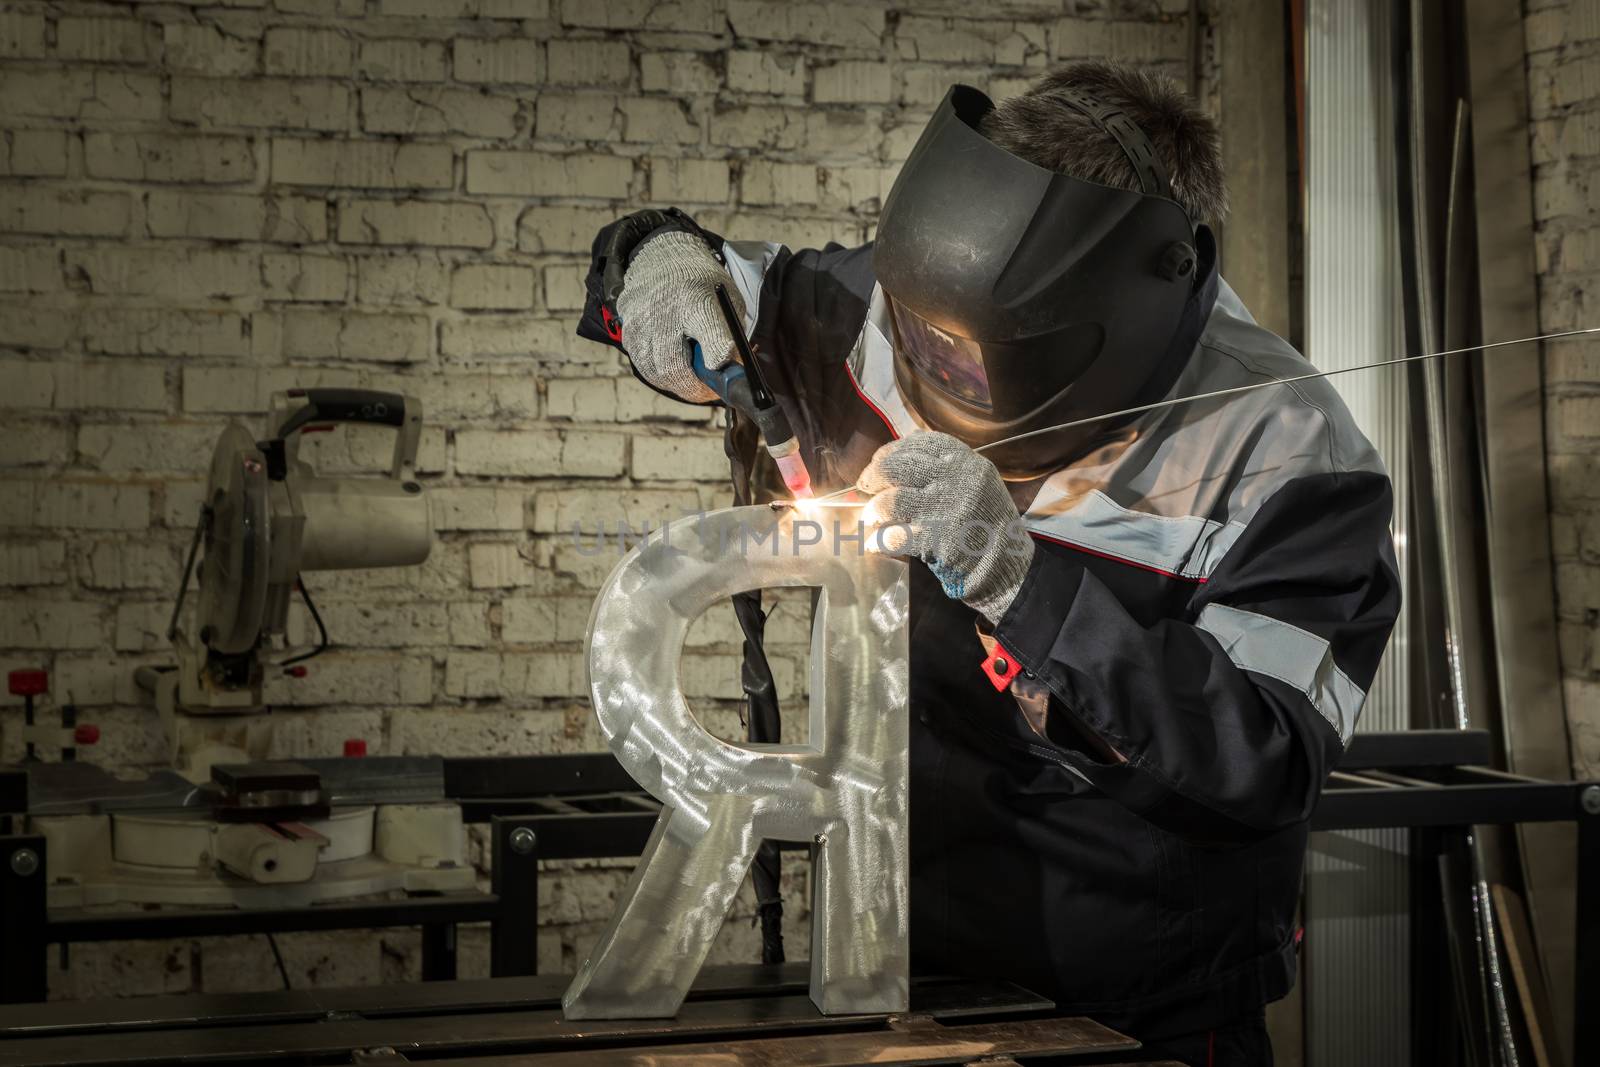 Welder welding a metal part in an industrial environment, wearing standard protection equipment. by sveter